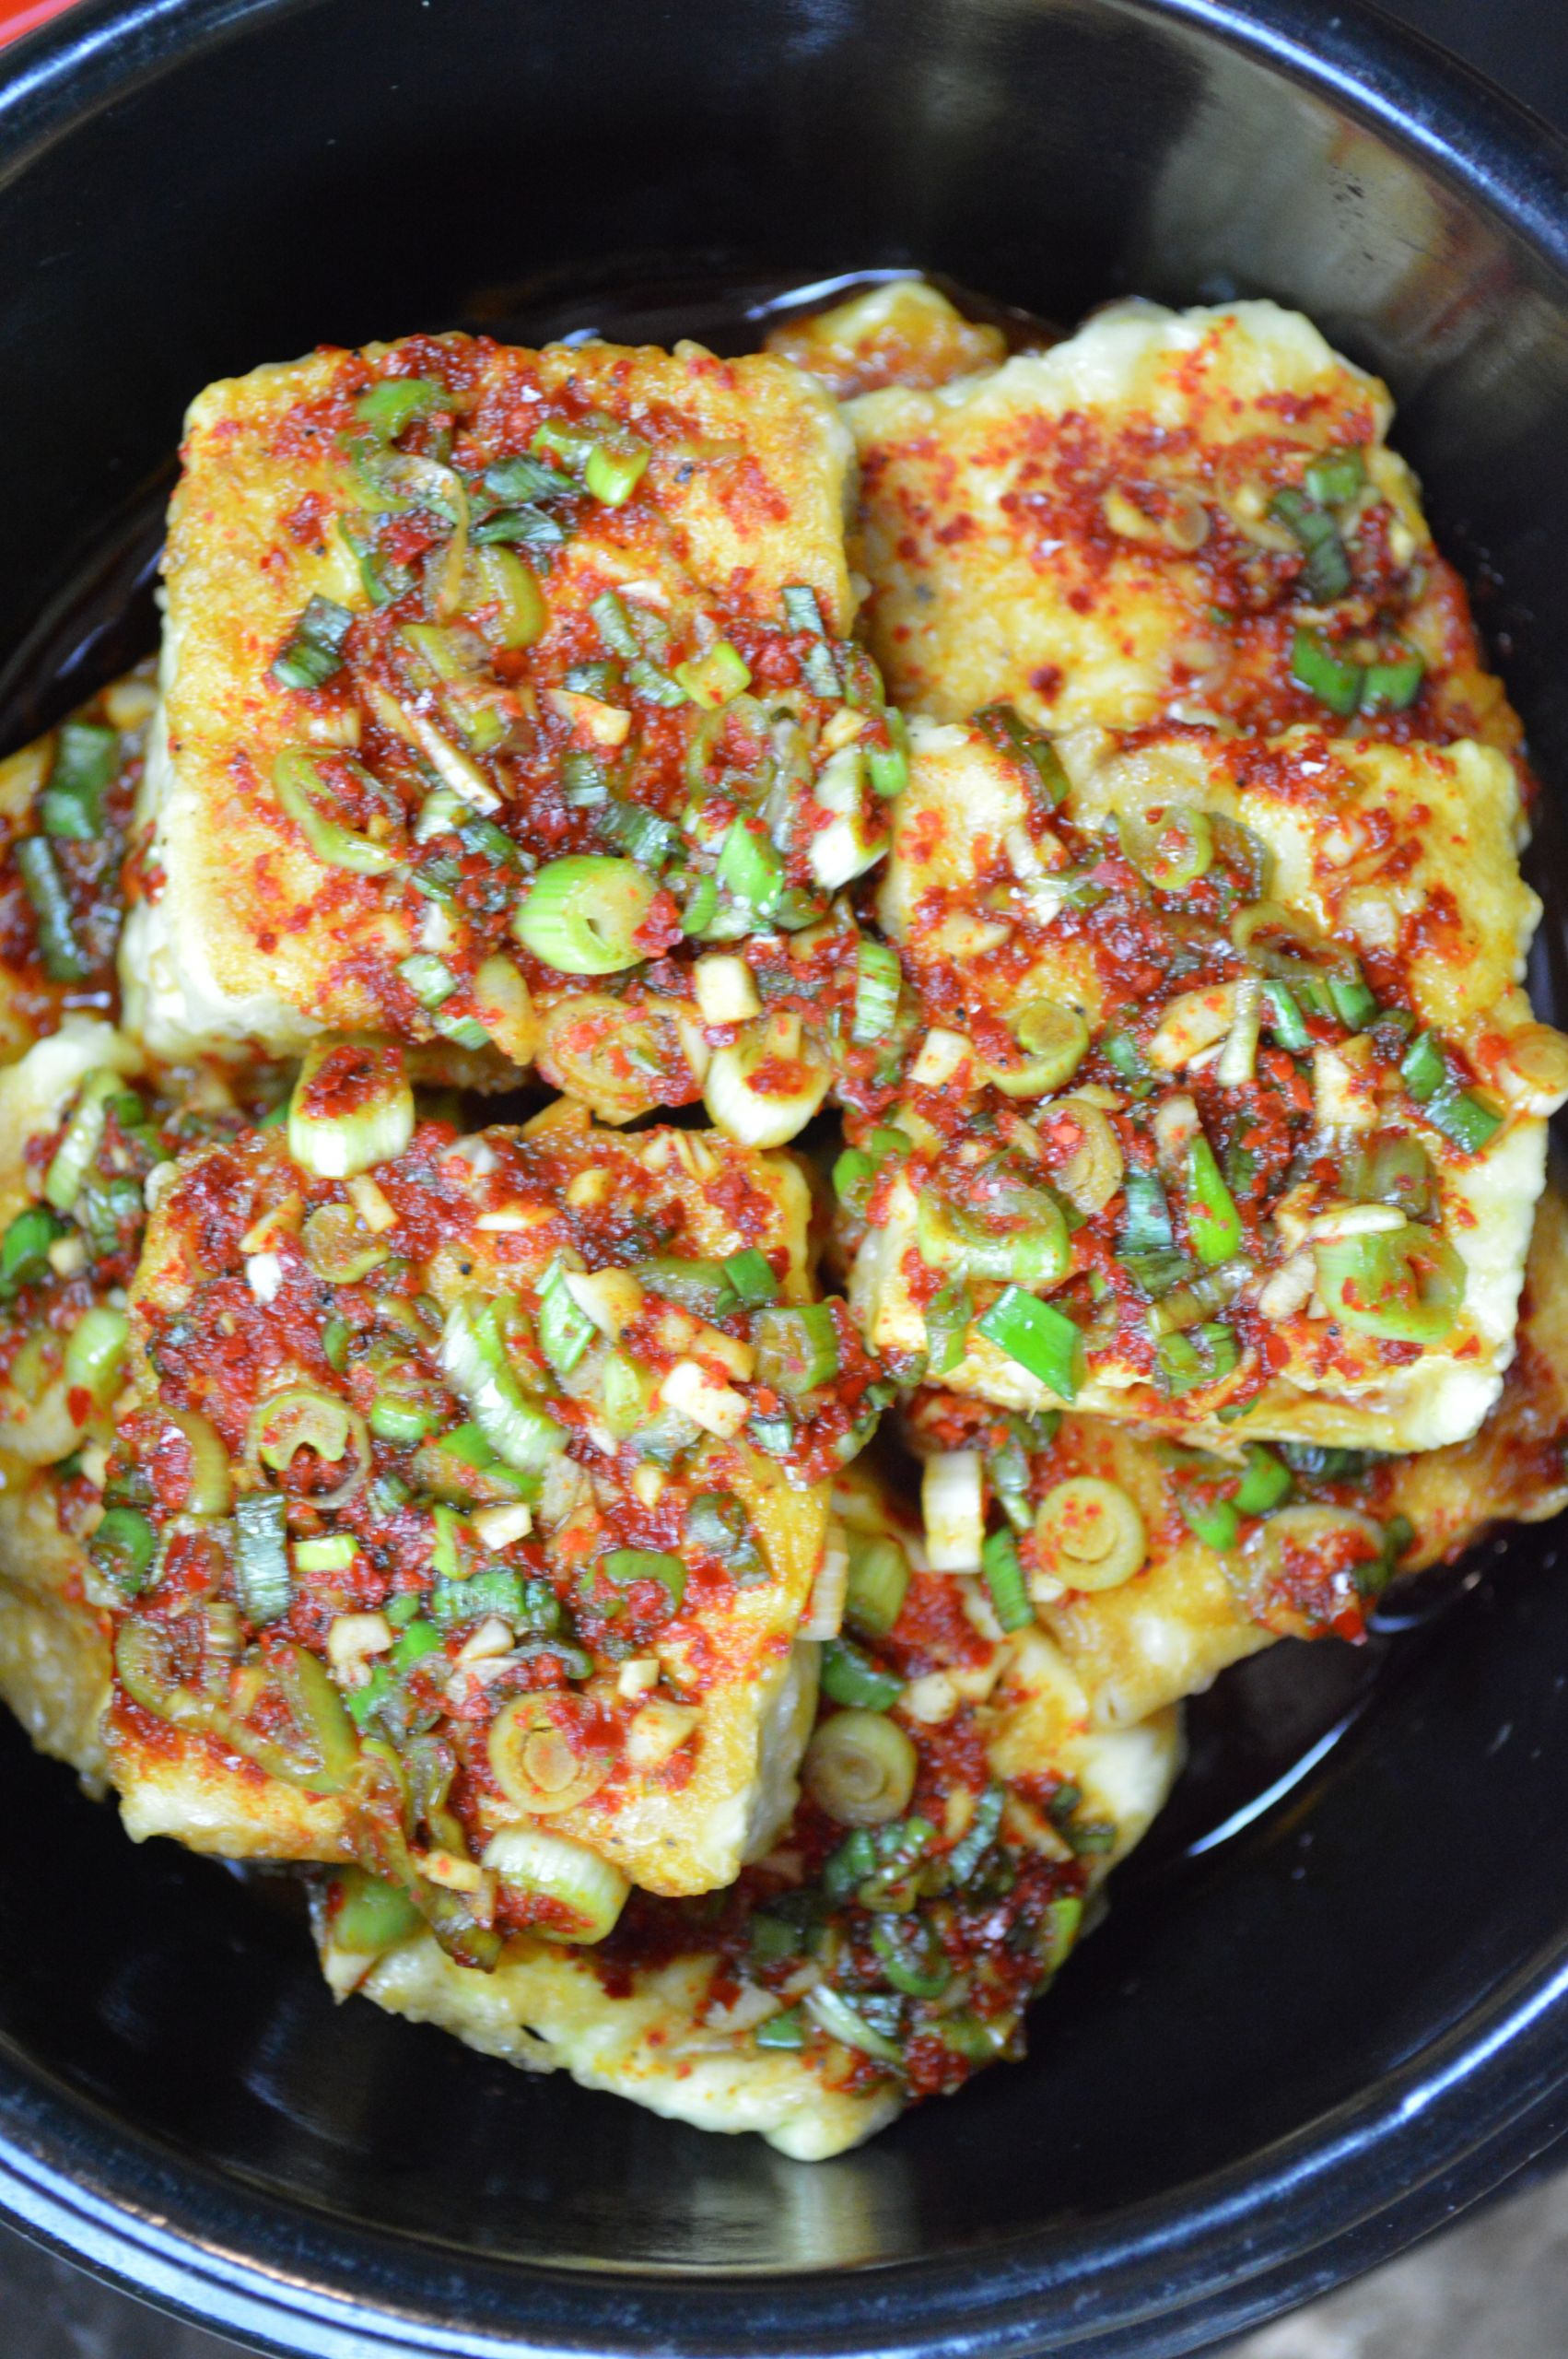 Recipes Using Tofu
 Tofu Jorim Korean Style Braised Tofu Recipe & Video